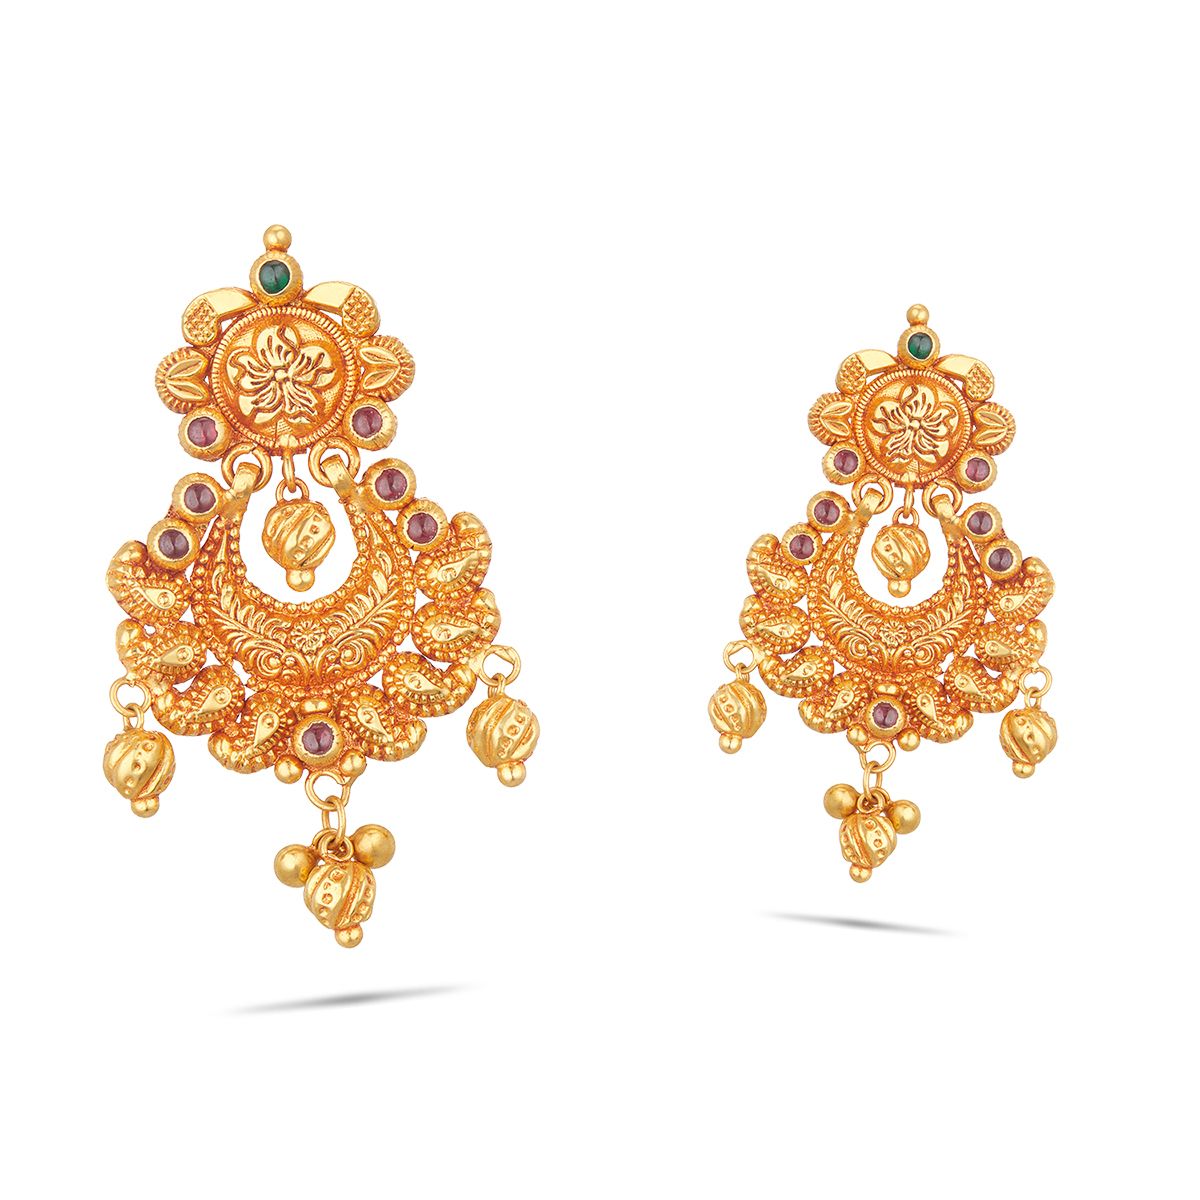 Update more than 231 buy chandbali earrings online best